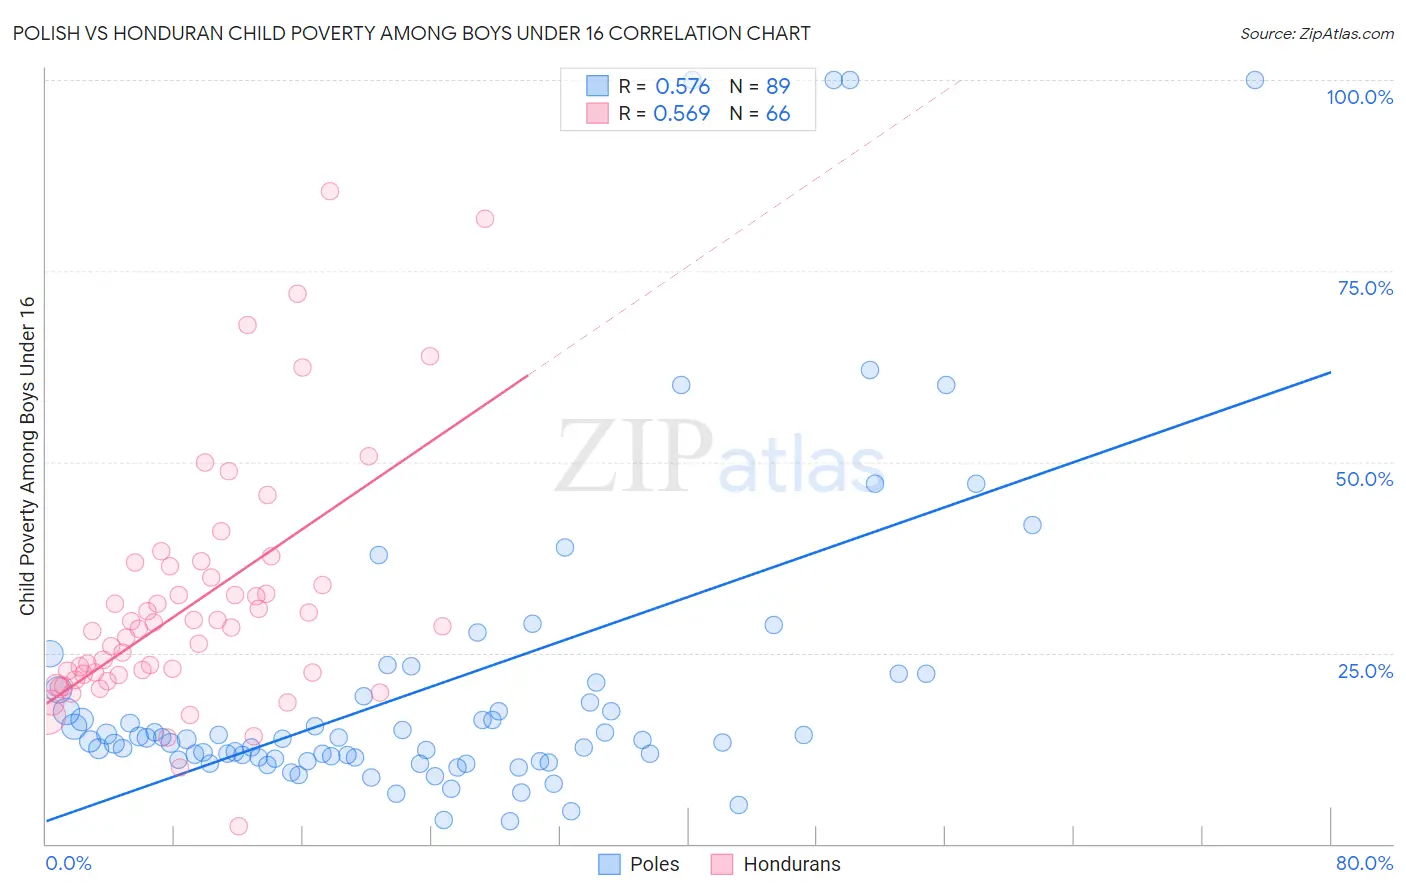 Polish vs Honduran Child Poverty Among Boys Under 16